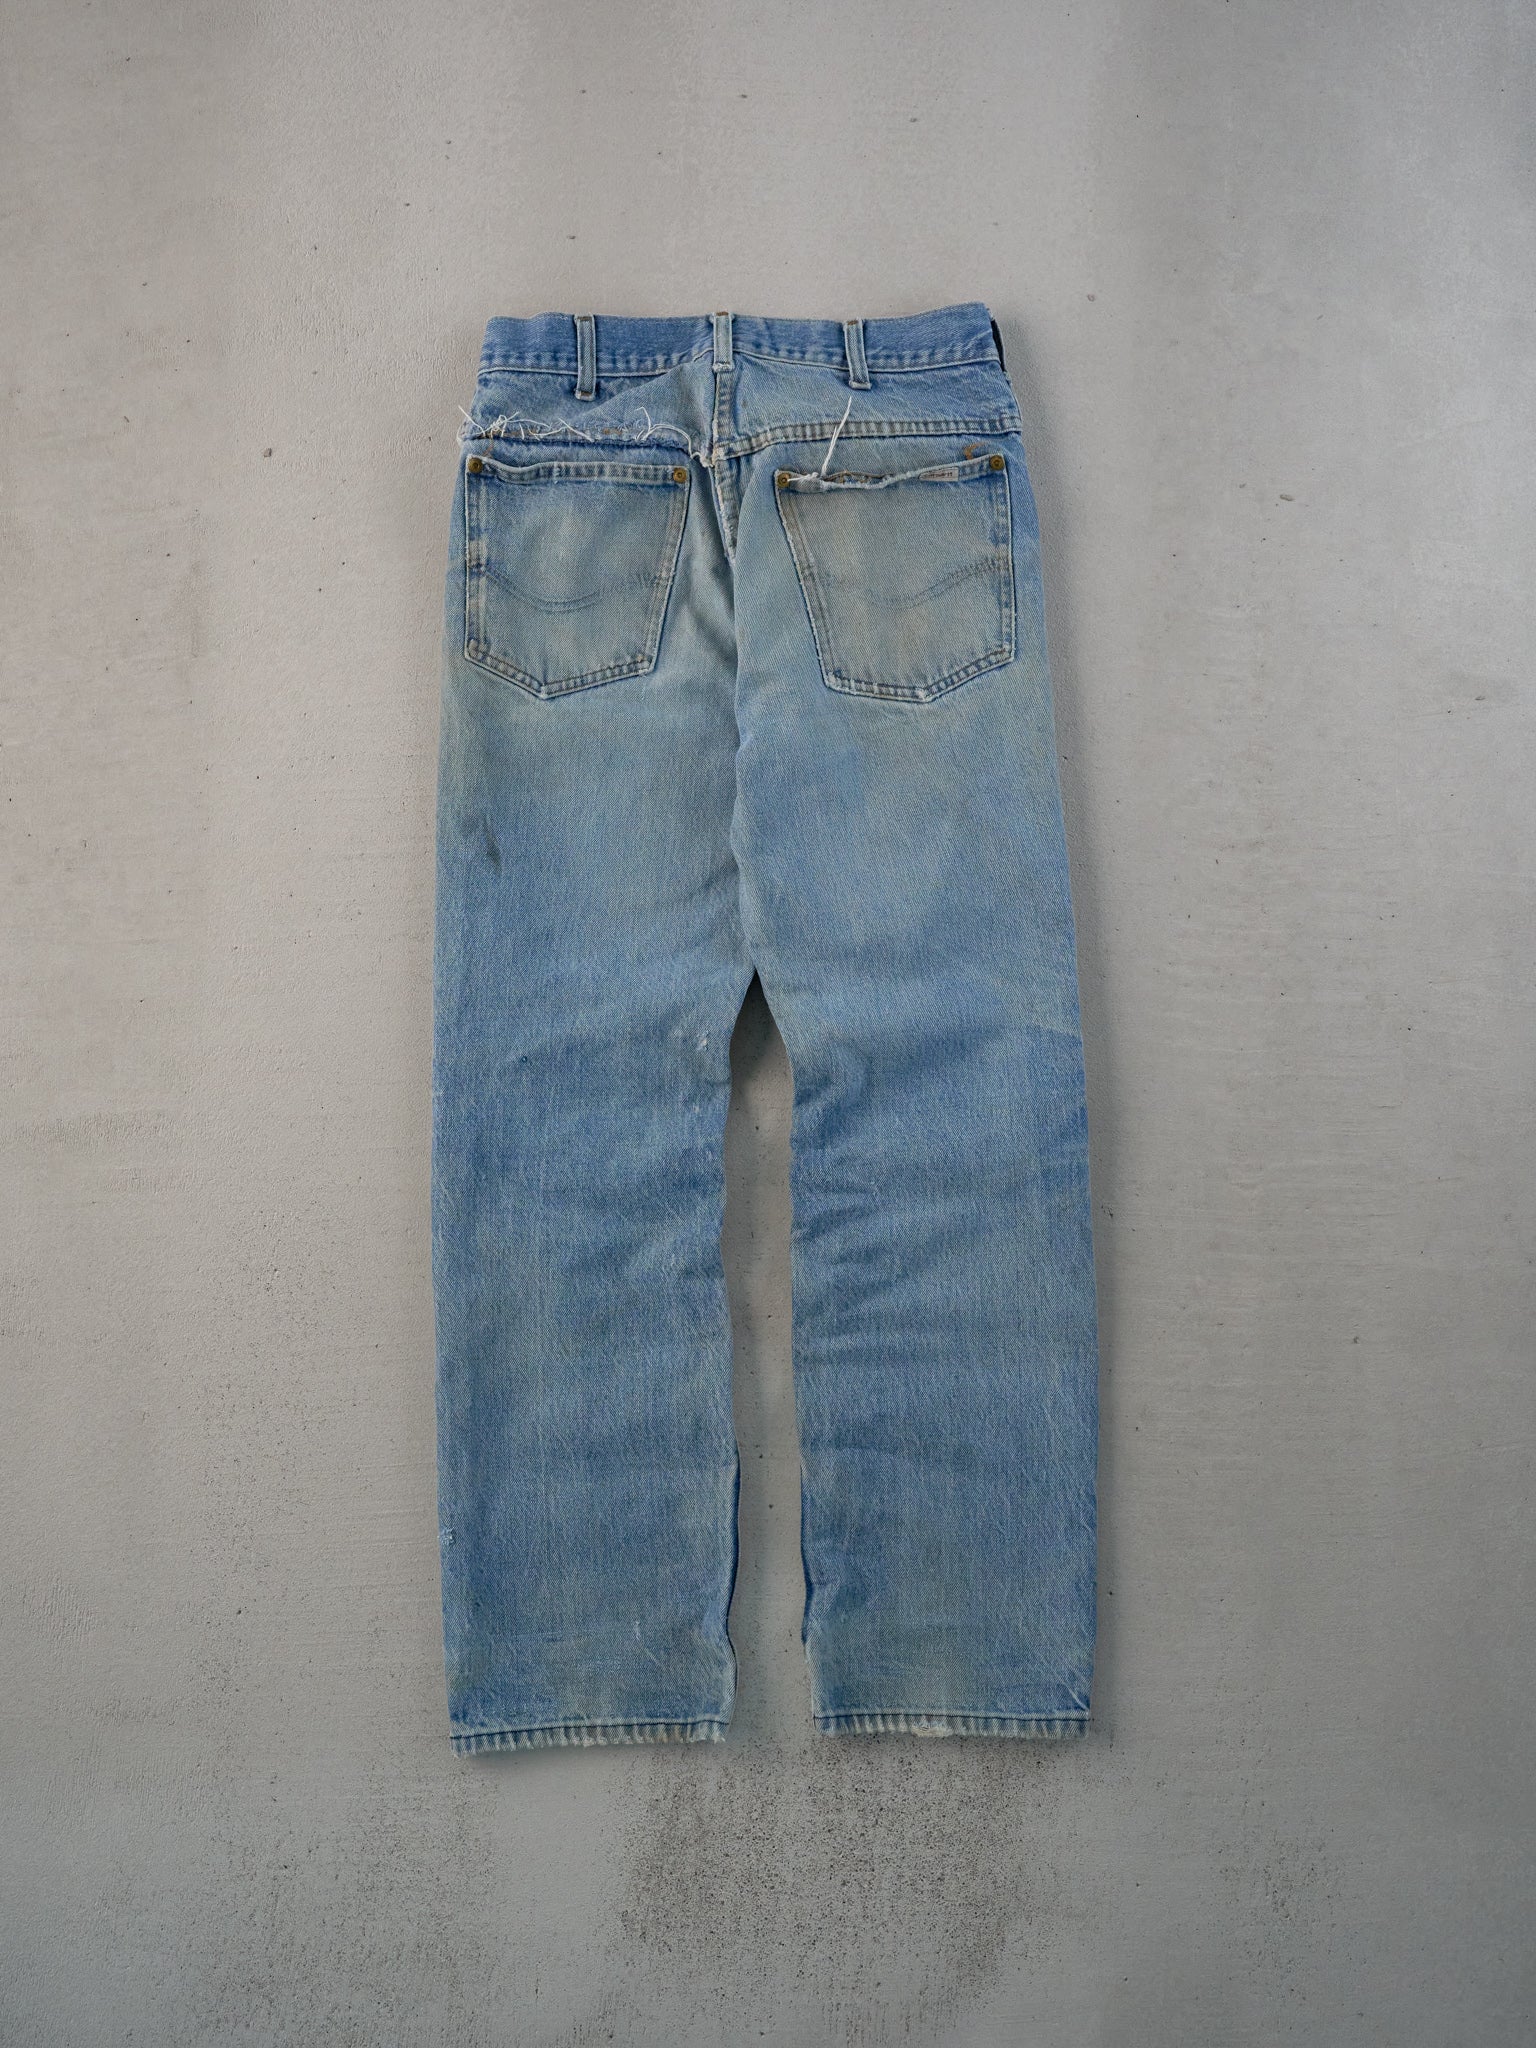 Vintage 80s Blue Carhartt Distressed Workwear Denim Jeans (29x29)